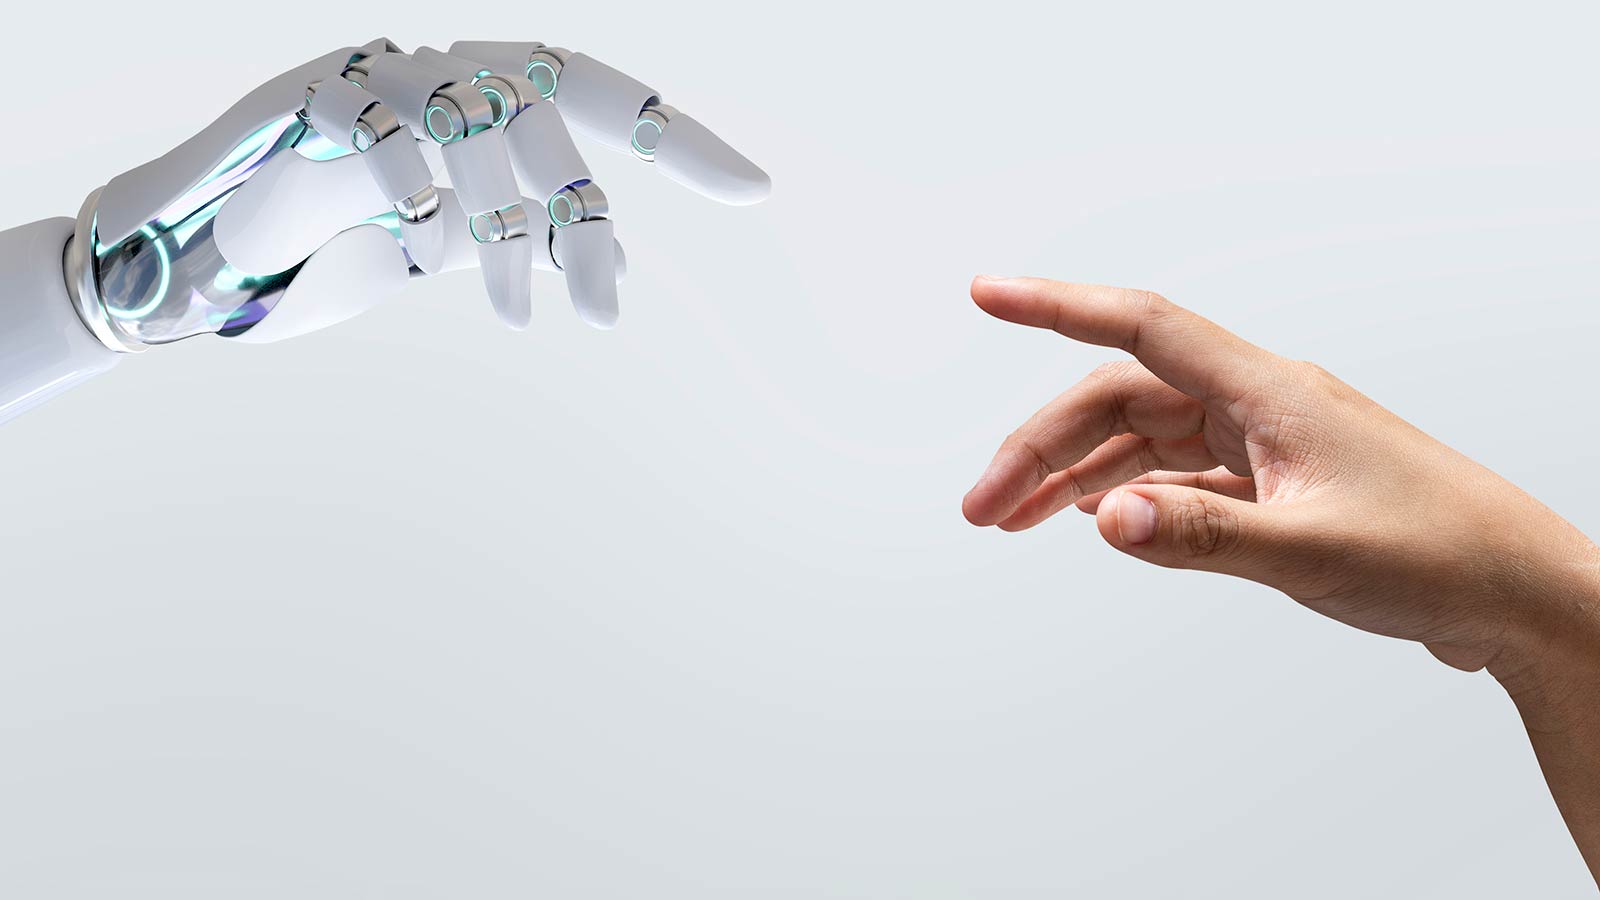 Abstract image of robot hand and human hand, mimicking a classical Renaissance image